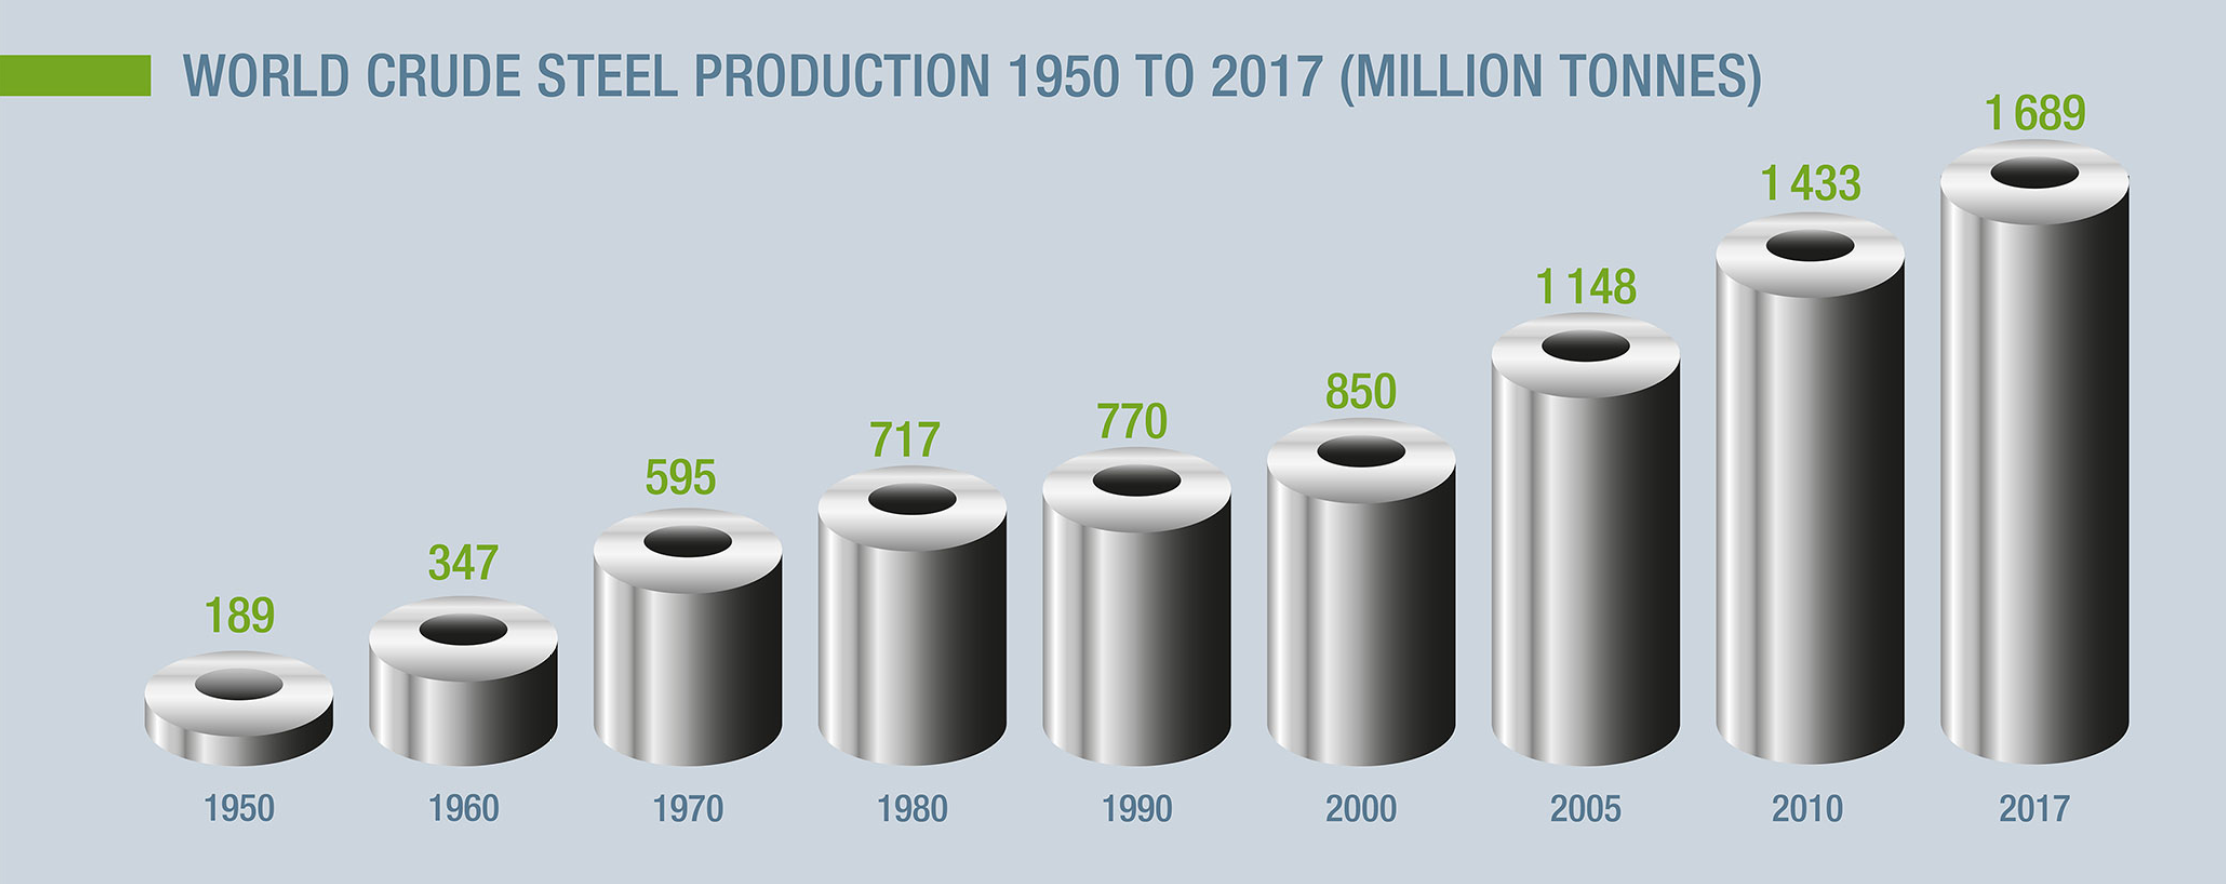 (crude-steel-production-evolution